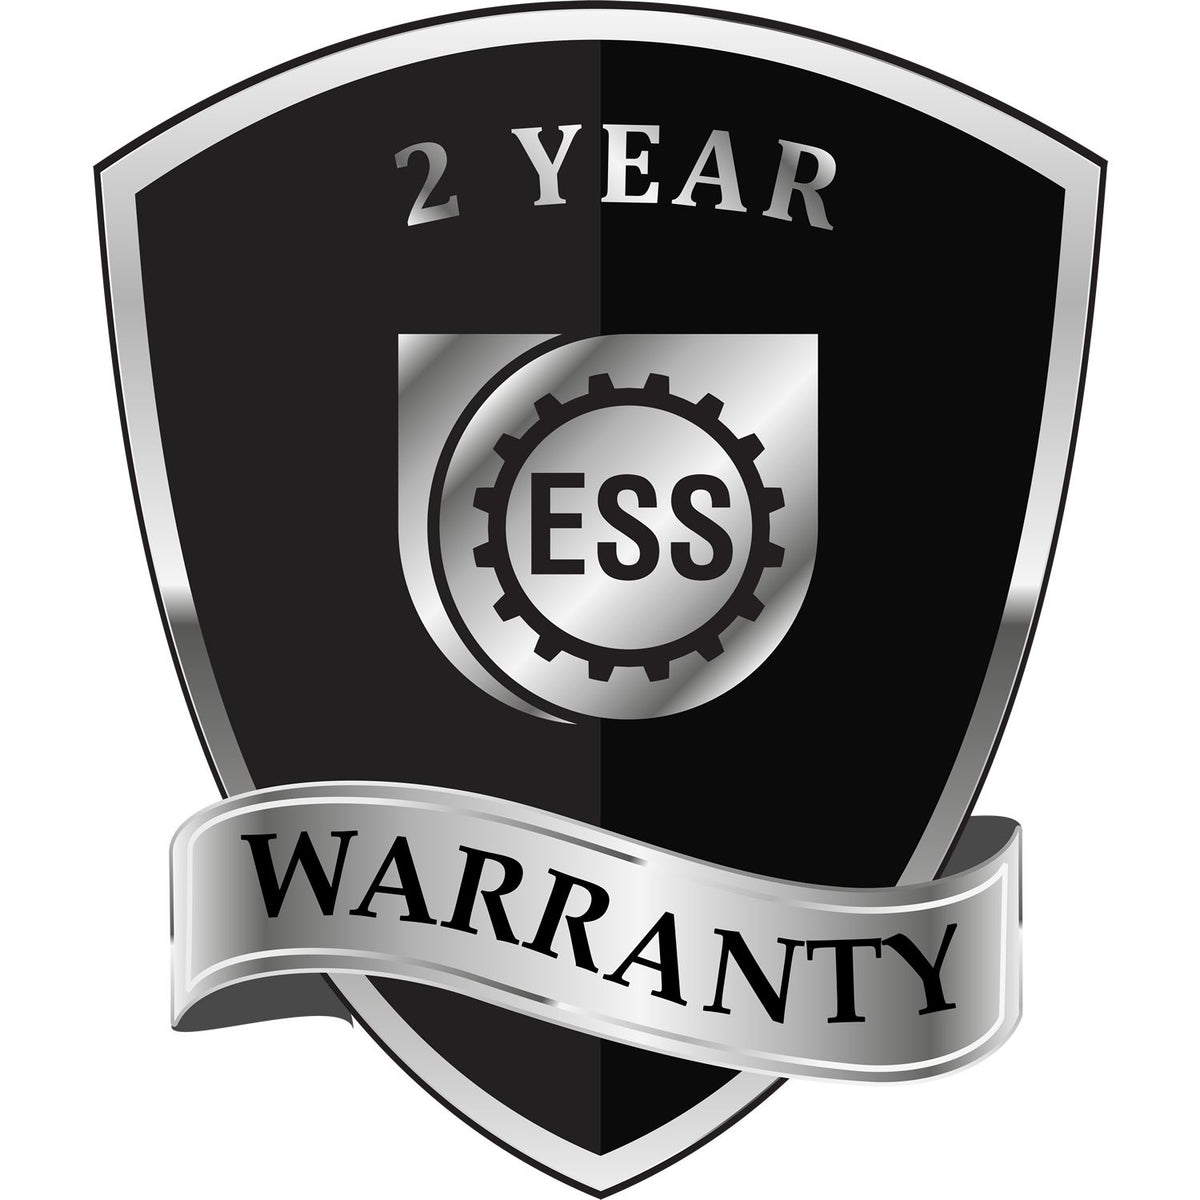 A black and silver badge or emblem showing warranty information for the Handheld Mississippi Professional Geologist Embosser